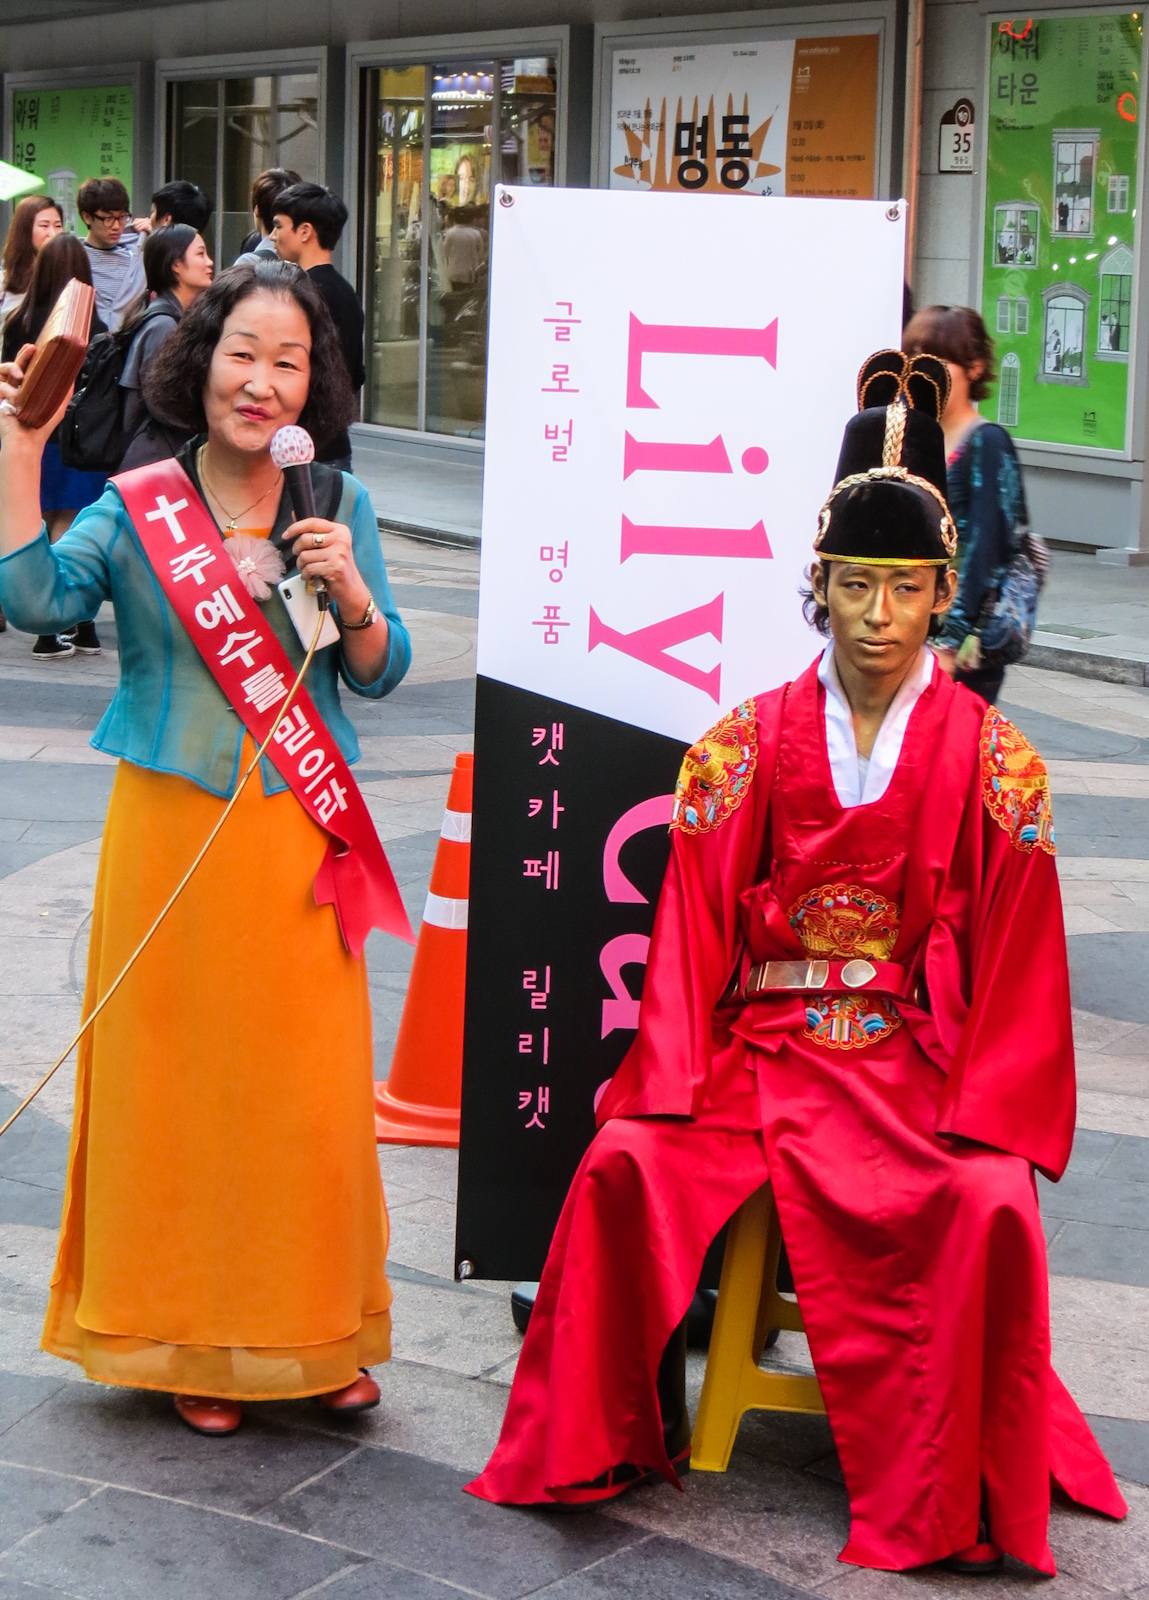 christian-and-street-performer-seoul-korea